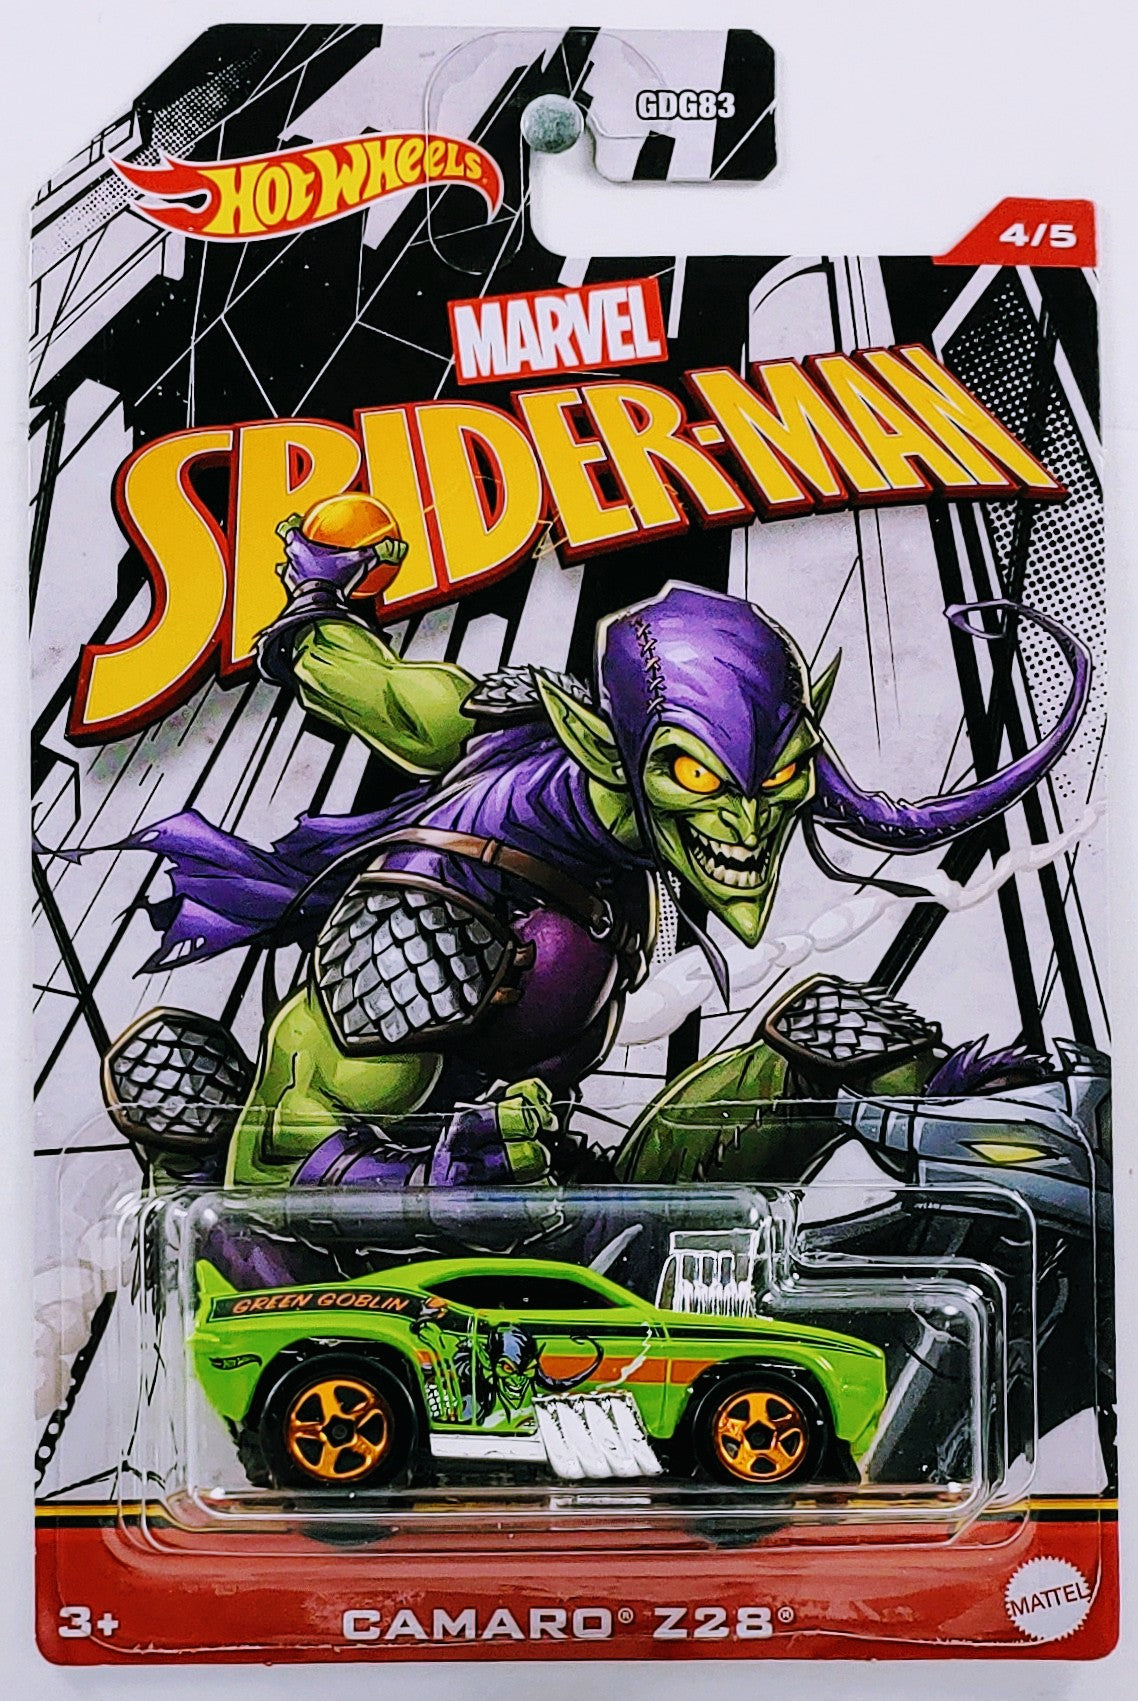 Hot Wheels 2023 - Marvel / Spider-man Theme Series 4/5 - Camaro Z28 - Green / Green Goblin